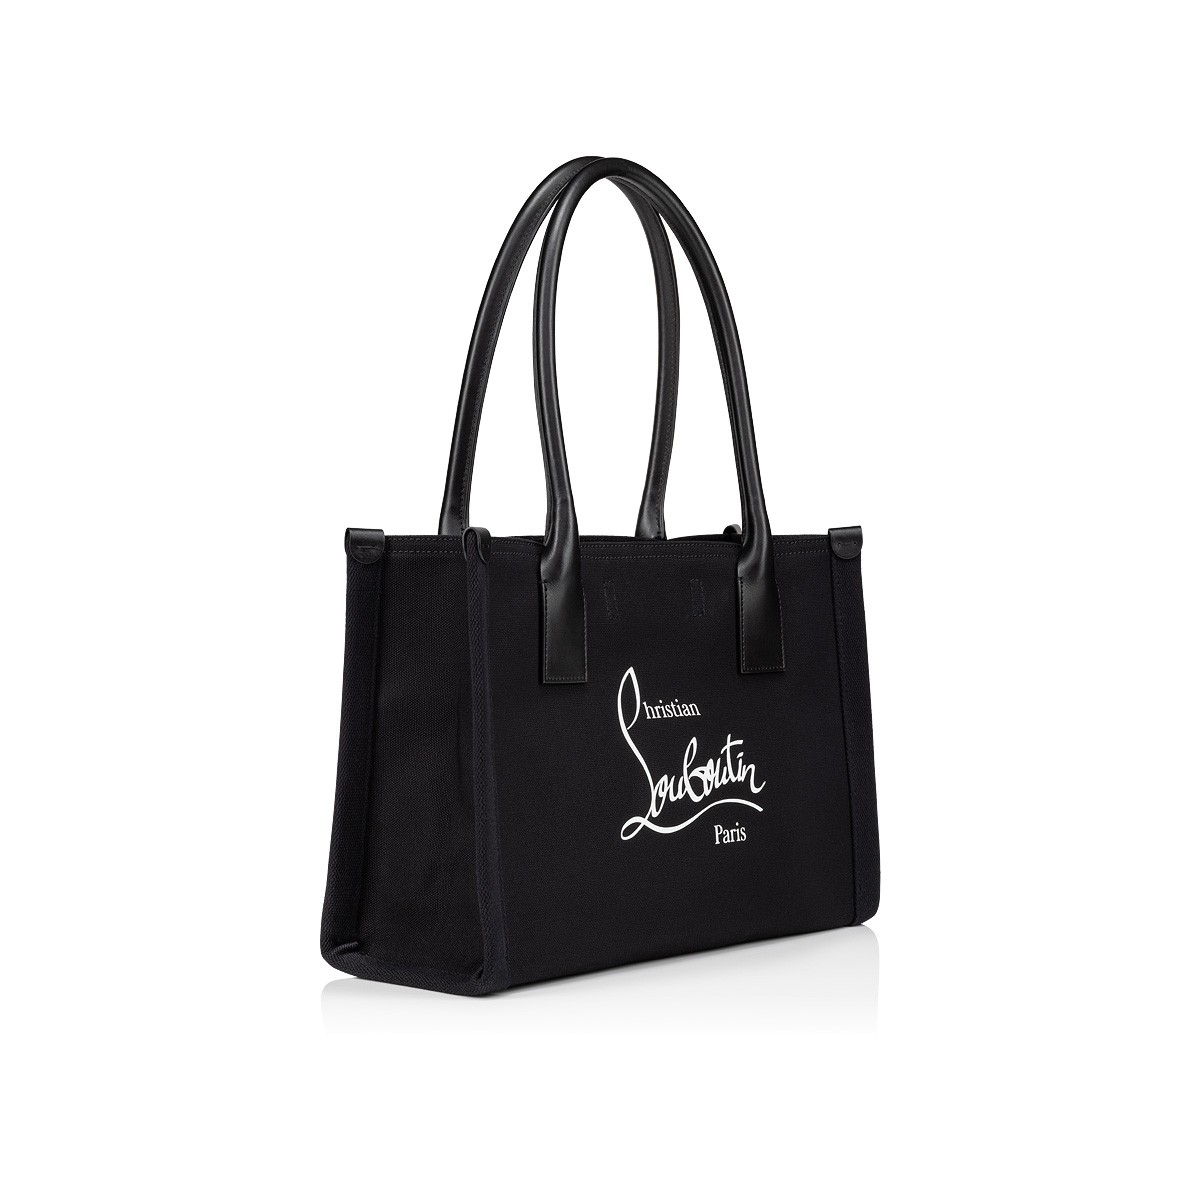 Nastroloubi E/W small Black Creative fabric - Handbags - Christian 